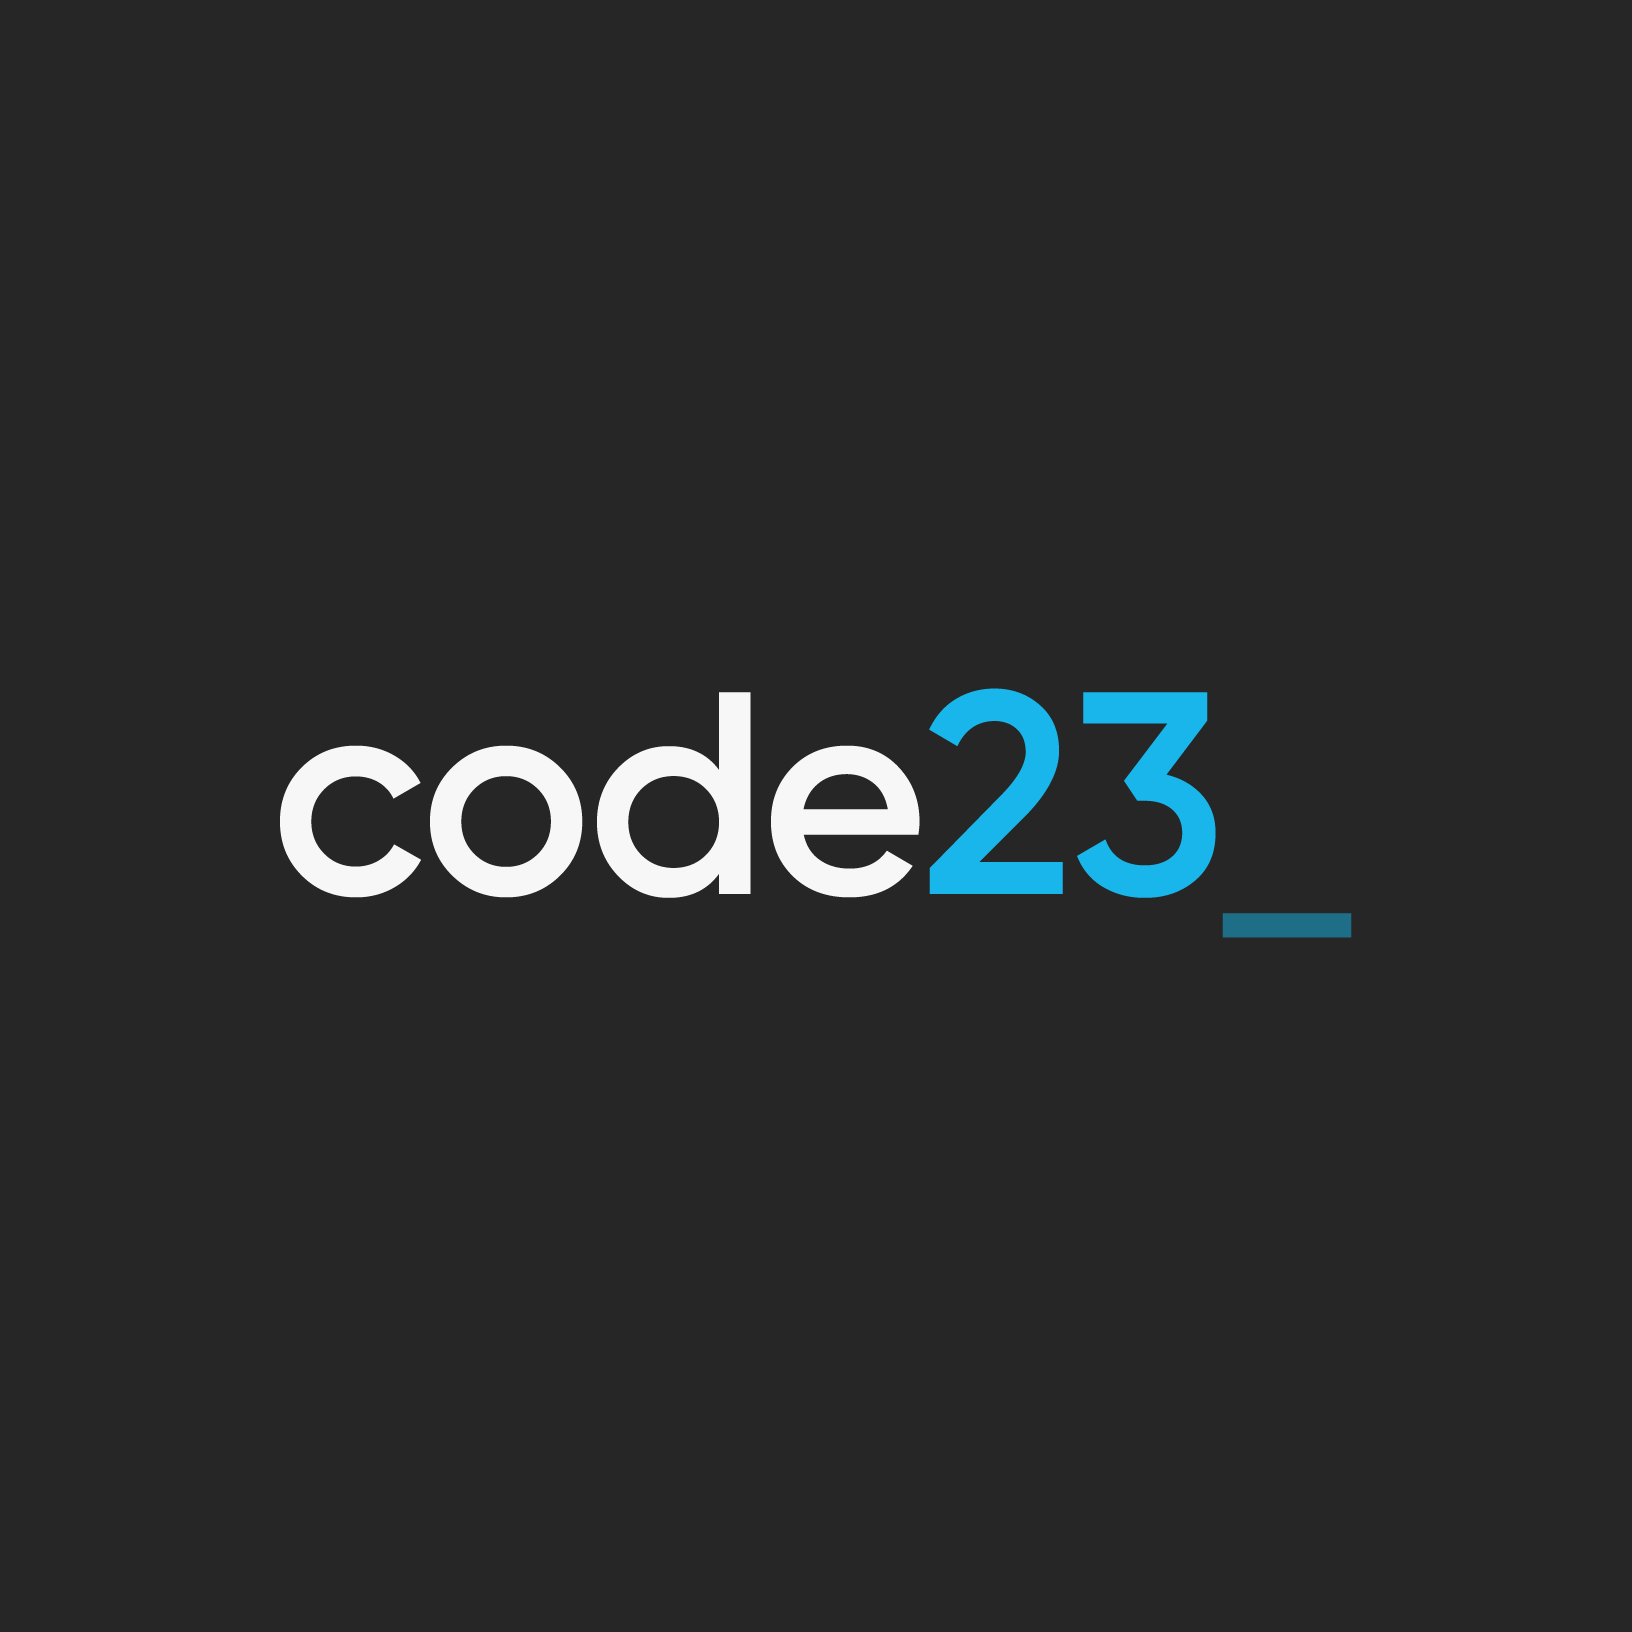 Code23